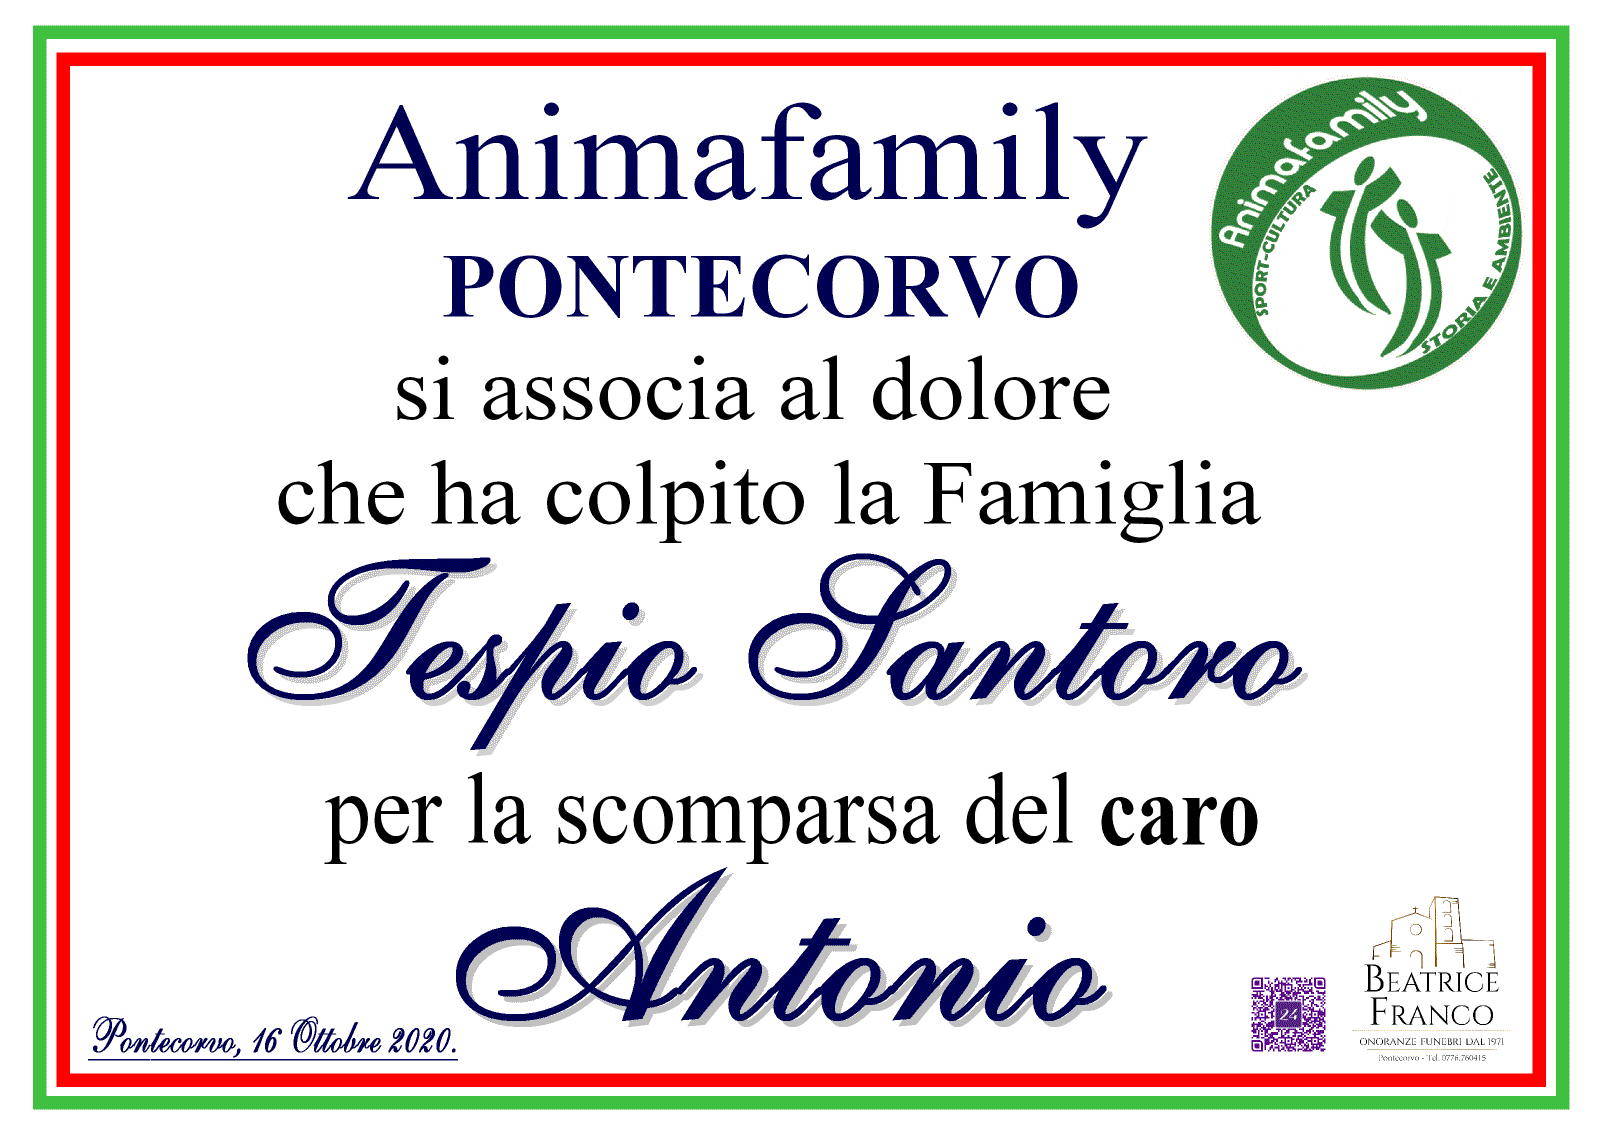 Animafamily - Pontecorvo